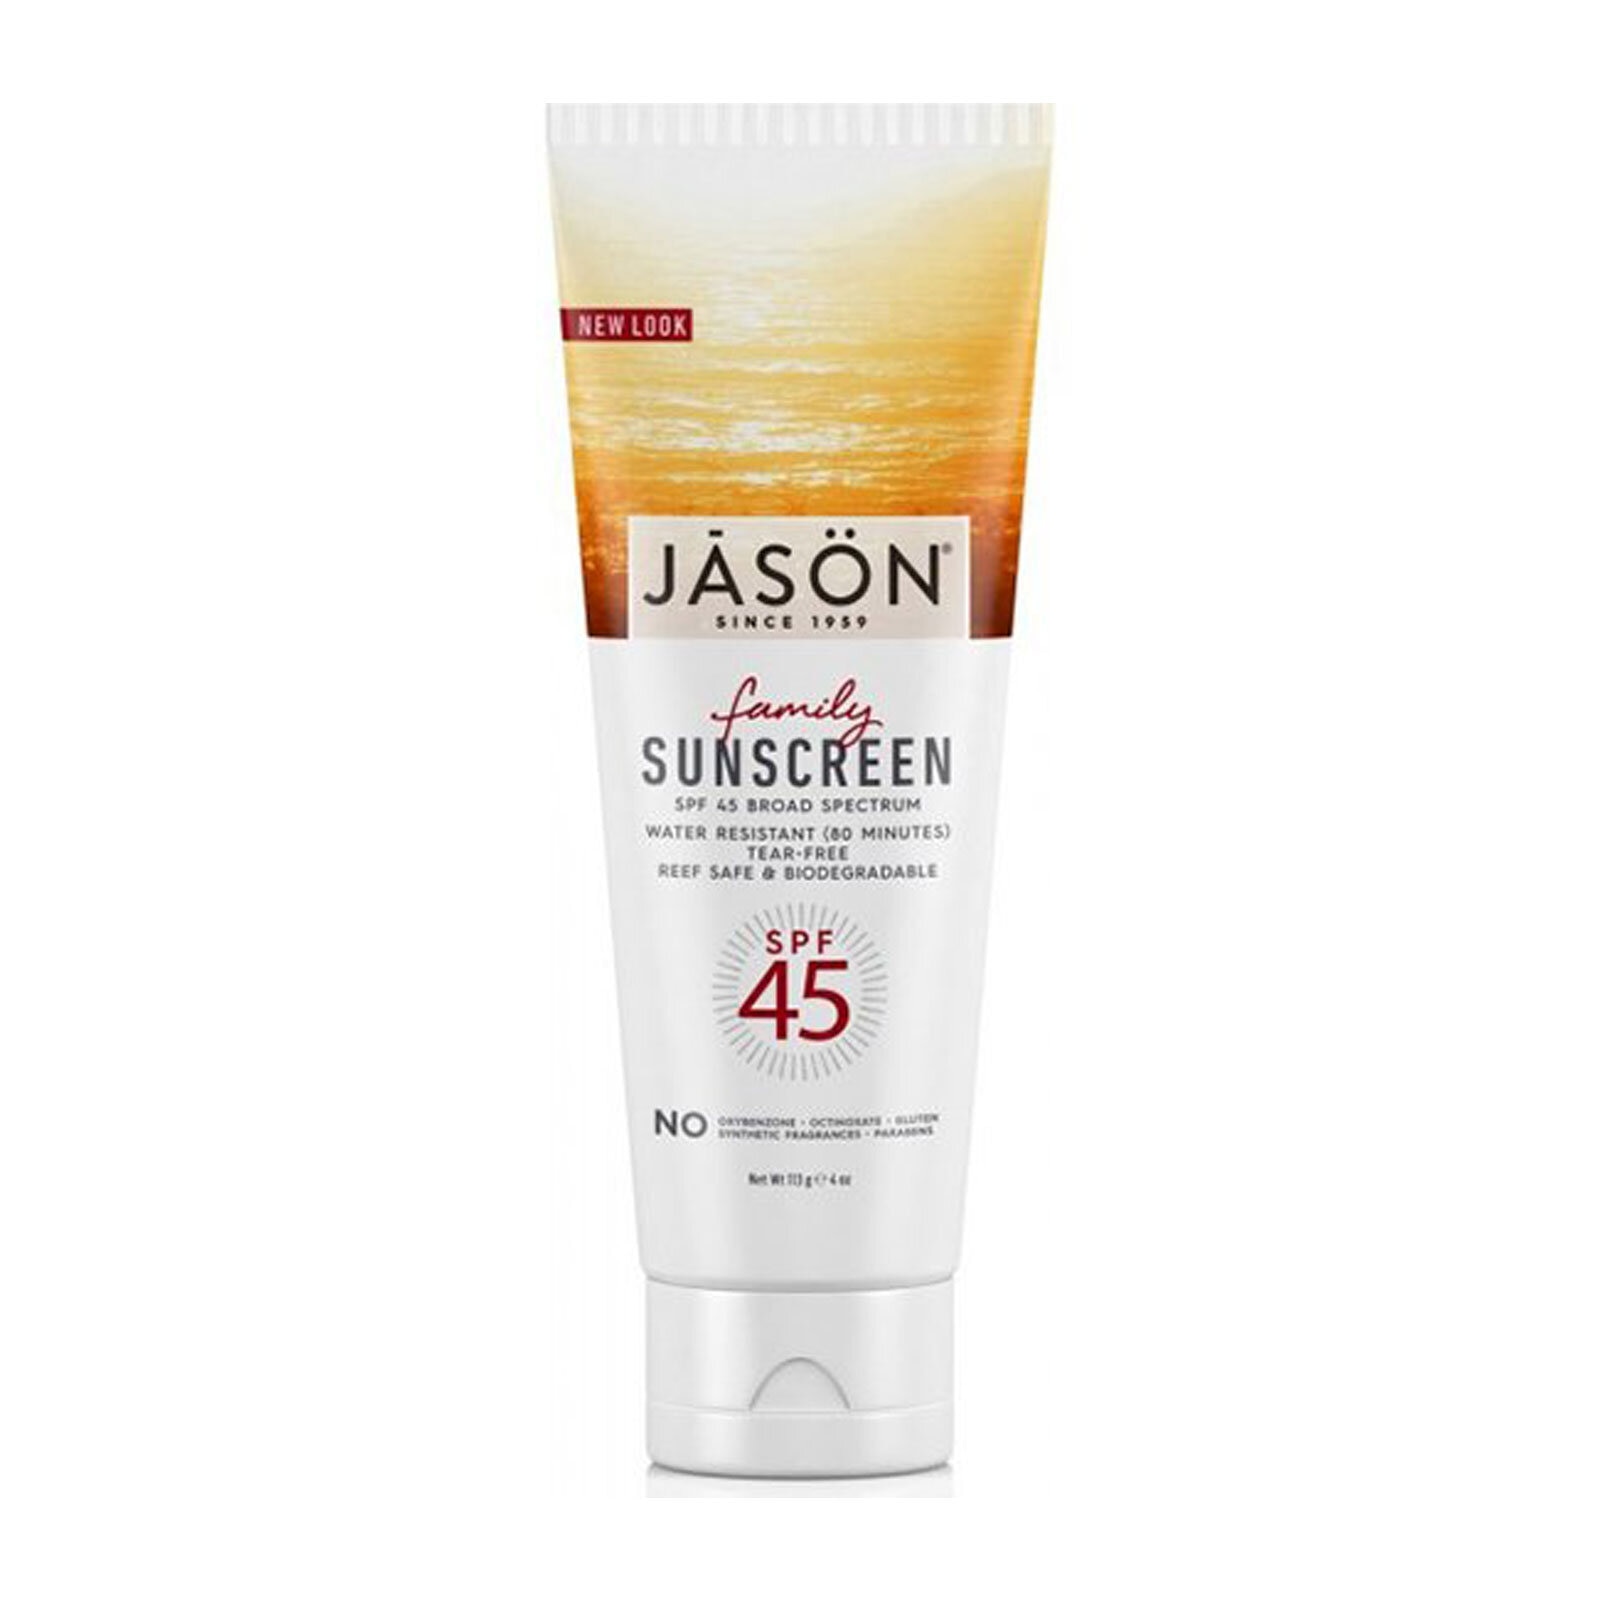 Jason Sunscreen Family SPF 45